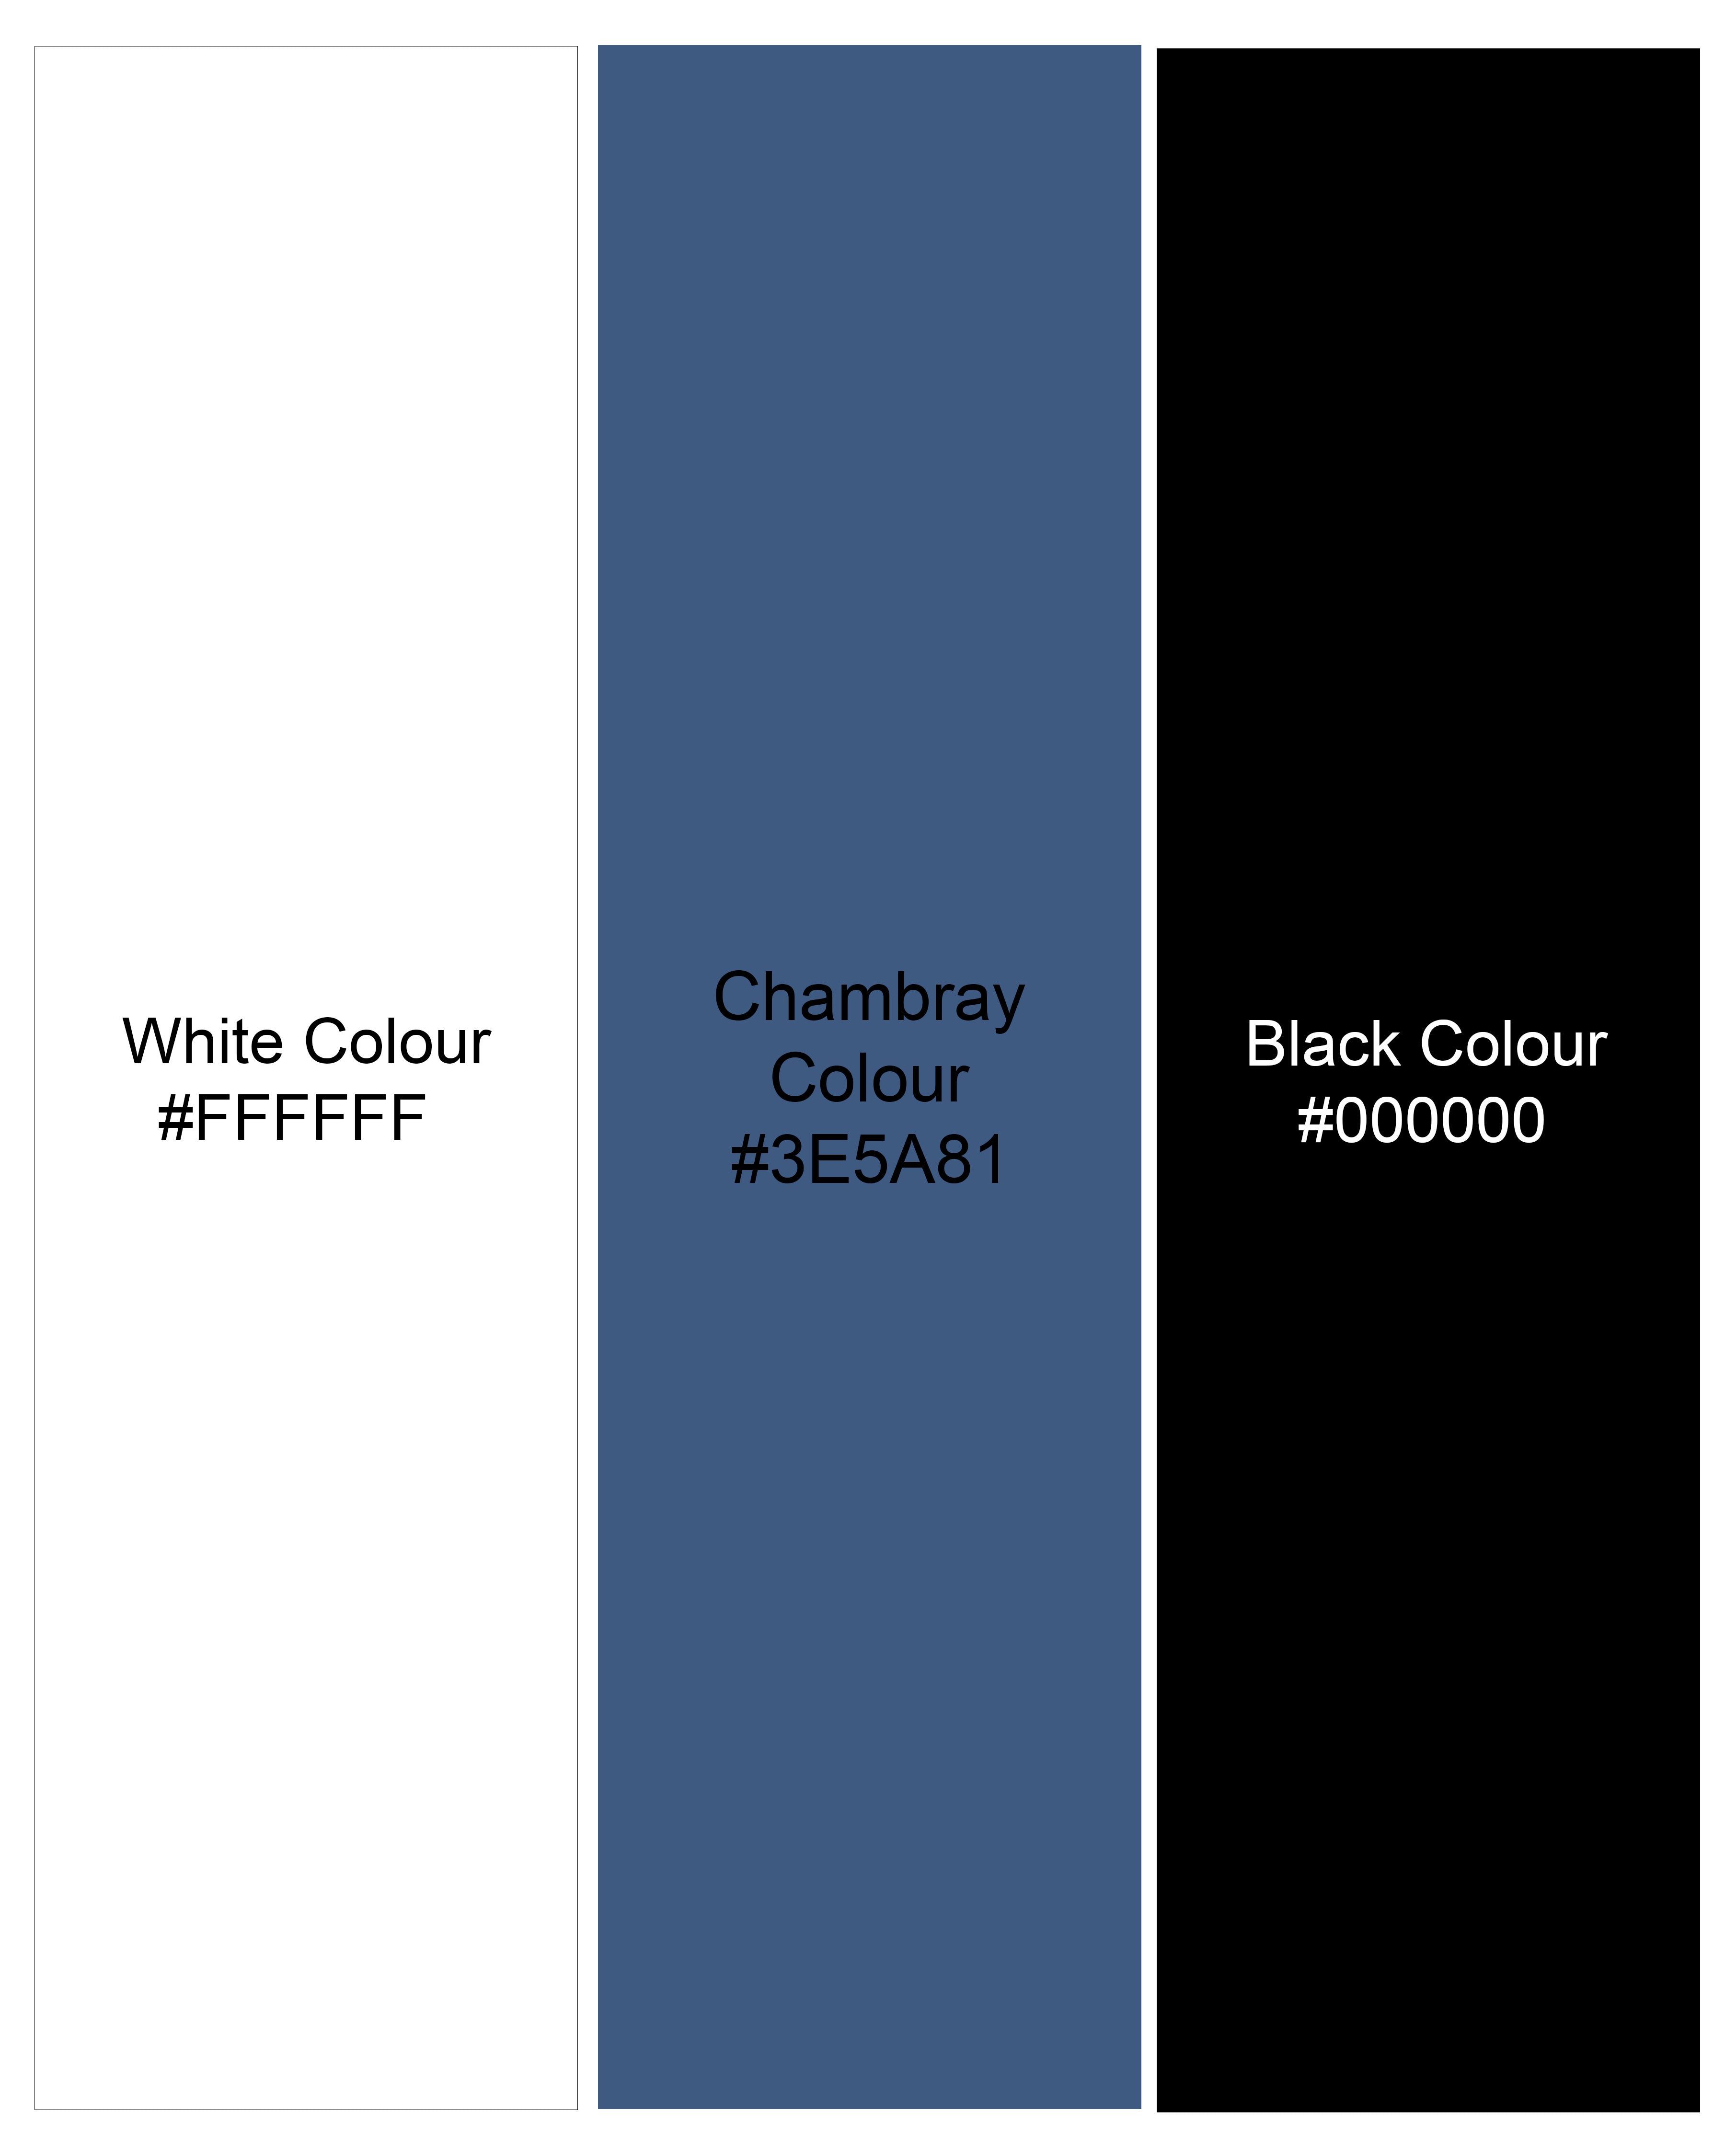 Chambray Blue and White Checkered Premium Cotton Shirt 9939-BLK-38, 9939-BLK-H-38, 9939-BLK-39, 9939-BLK-H-39, 9939-BLK-40, 9939-BLK-H-40, 9939-BLK-42, 9939-BLK-H-42, 9939-BLK-44, 9939-BLK-H-44, 9939-BLK-46, 9939-BLK-H-46, 9939-BLK-48, 9939-BLK-H-48, 9939-BLK-50, 9939-BLK-H-50, 9939-BLK-52, 9939-BLK-H-52